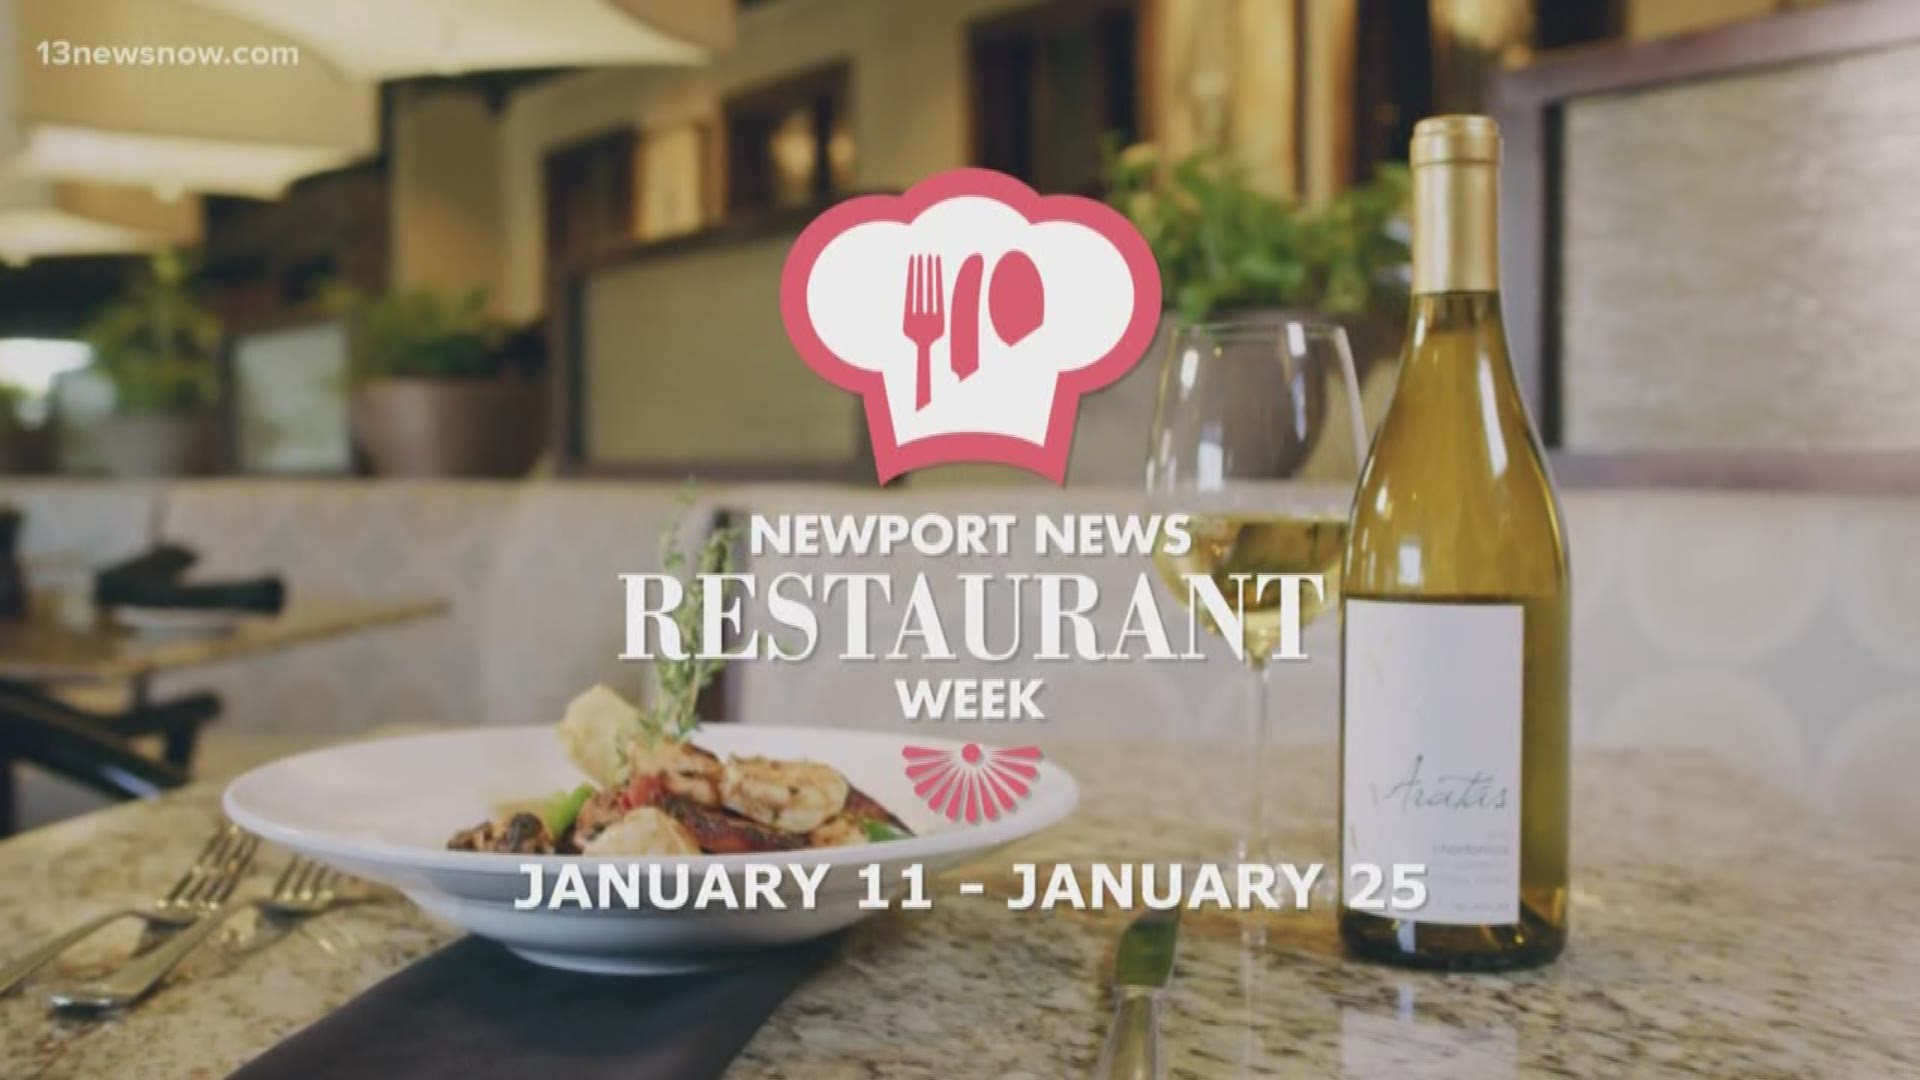 Get your taste buds ready! Restaurant week is here in Newport News.